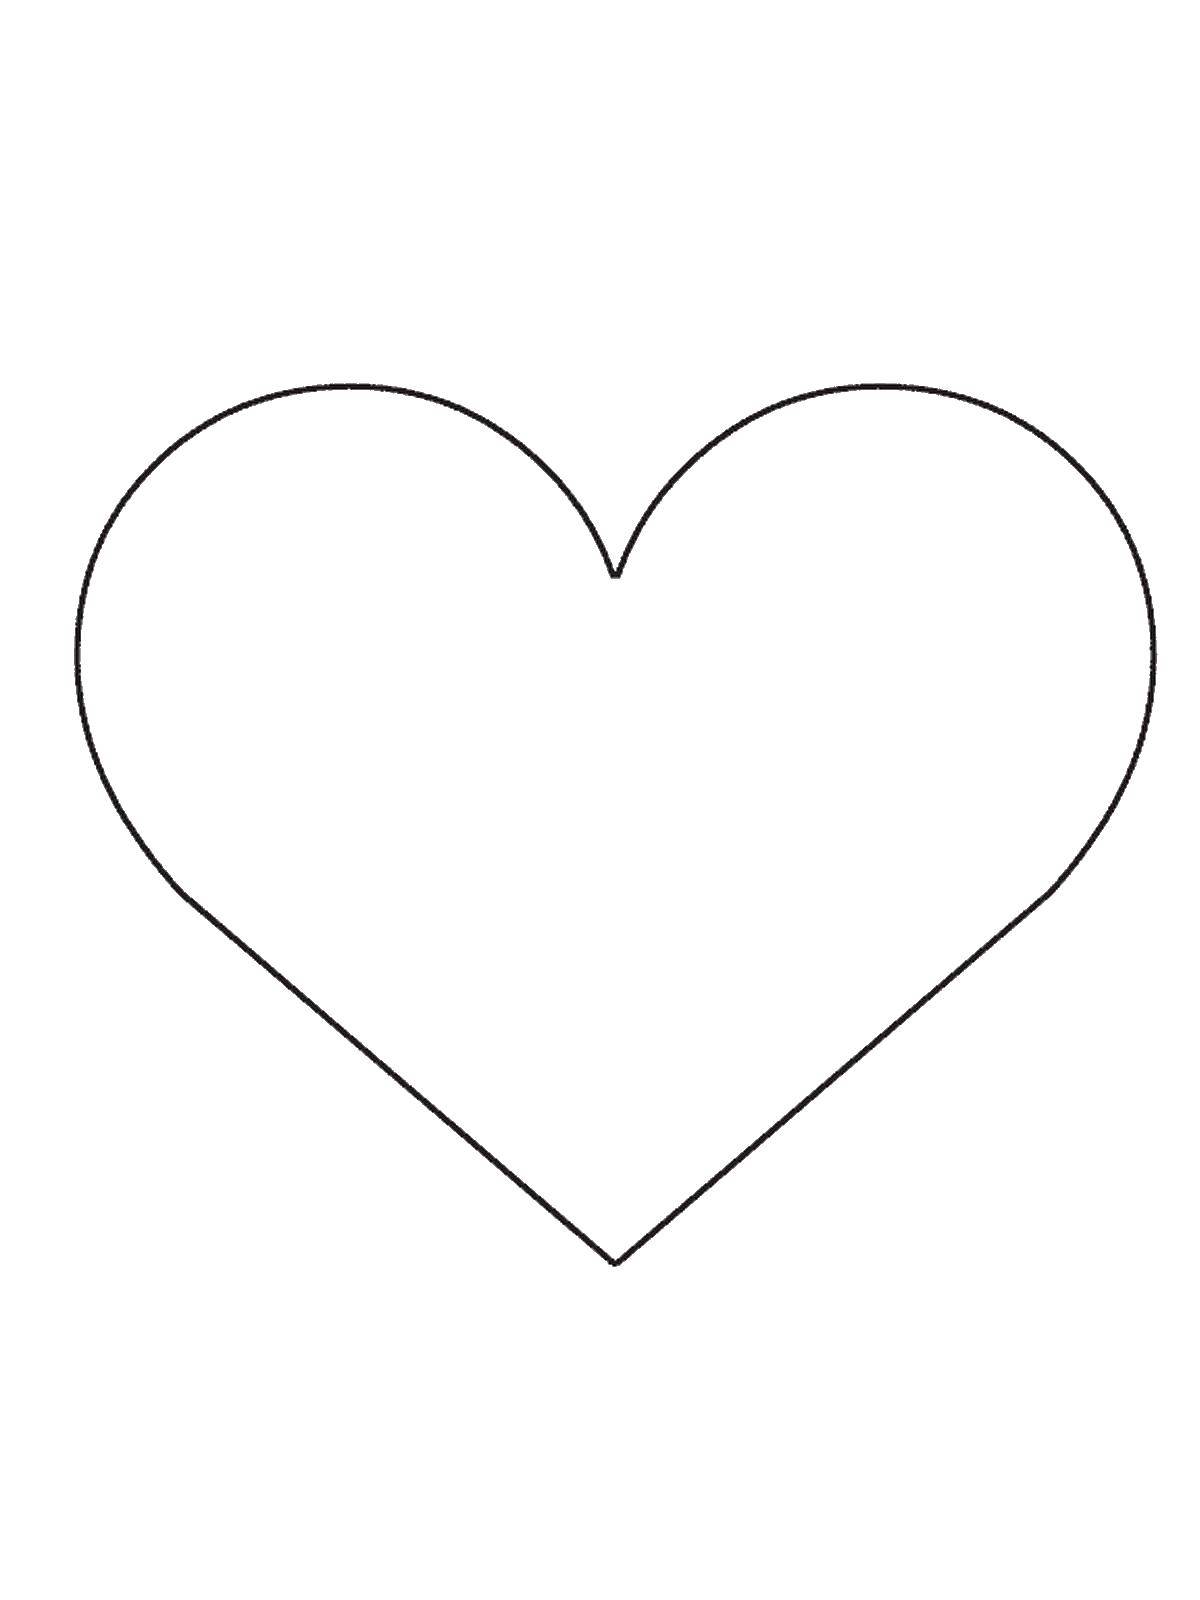 Название: Раскраска Сердце. Категория: раскраски из фигур. Теги: Сердце.